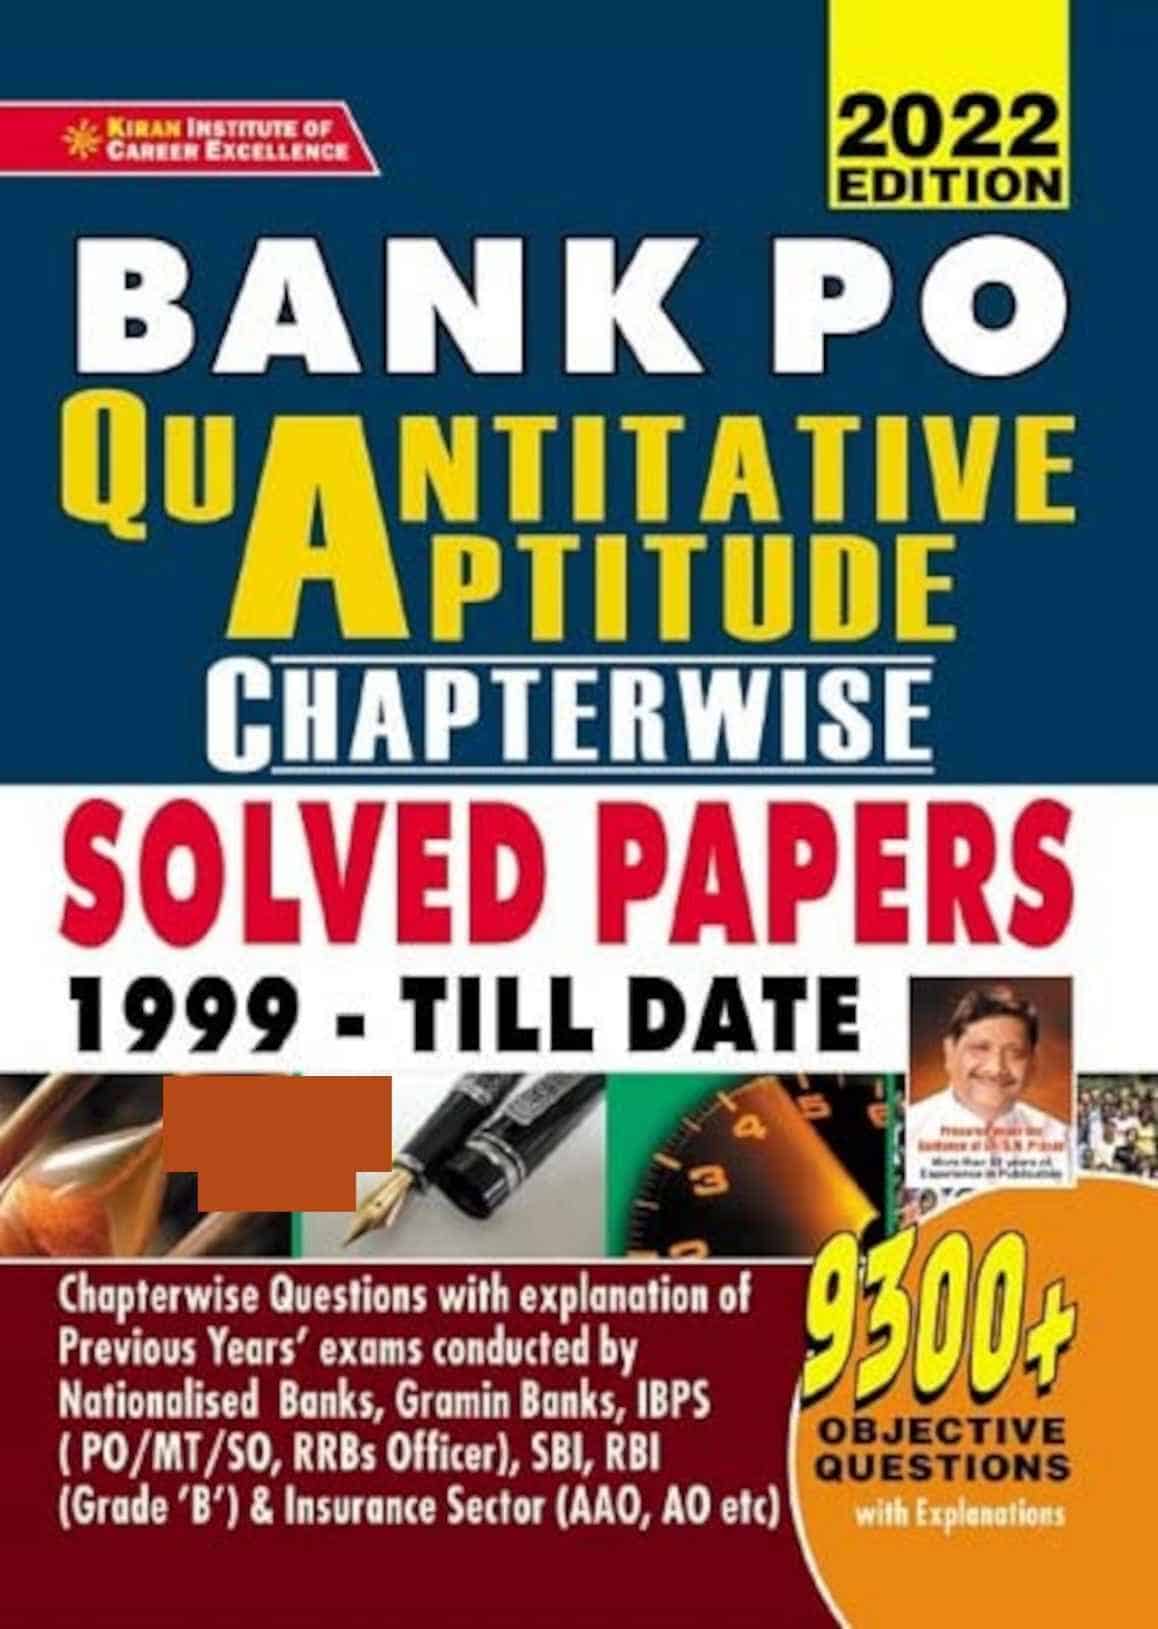 Kiran Bank PO Quantitative Aptitude 9300+ Question - 2022 Edition